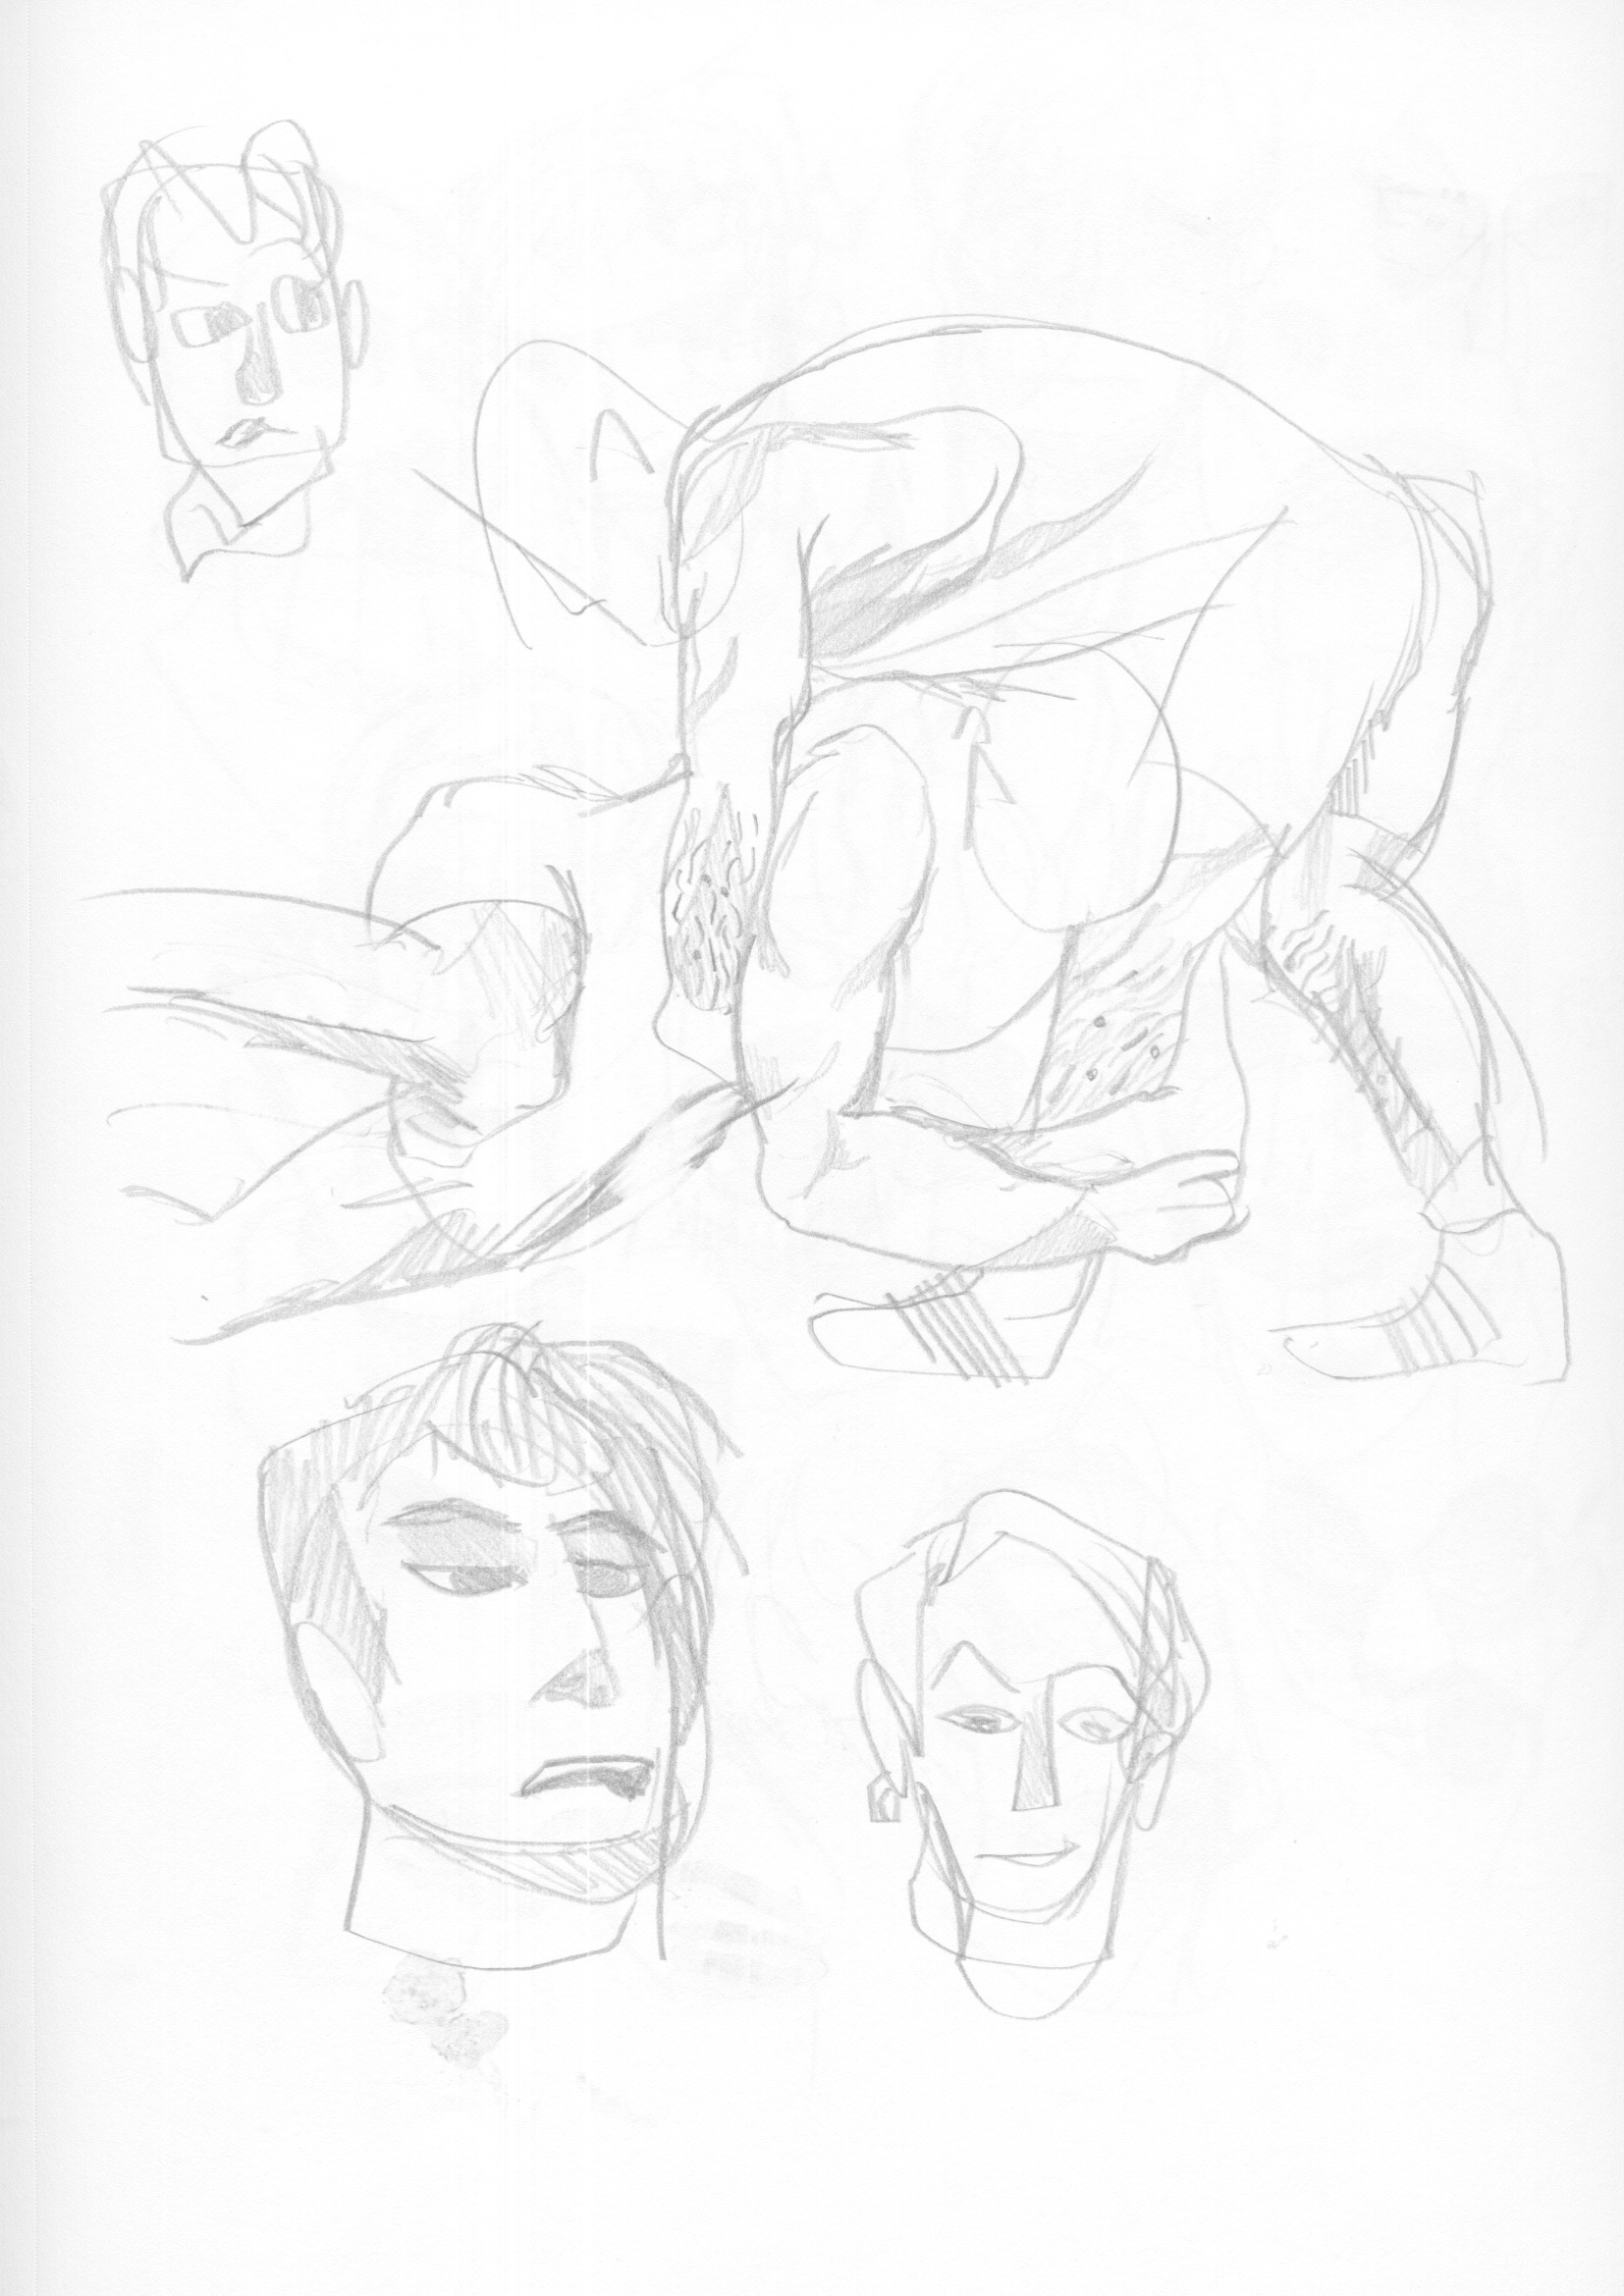 Sketchbook page 133